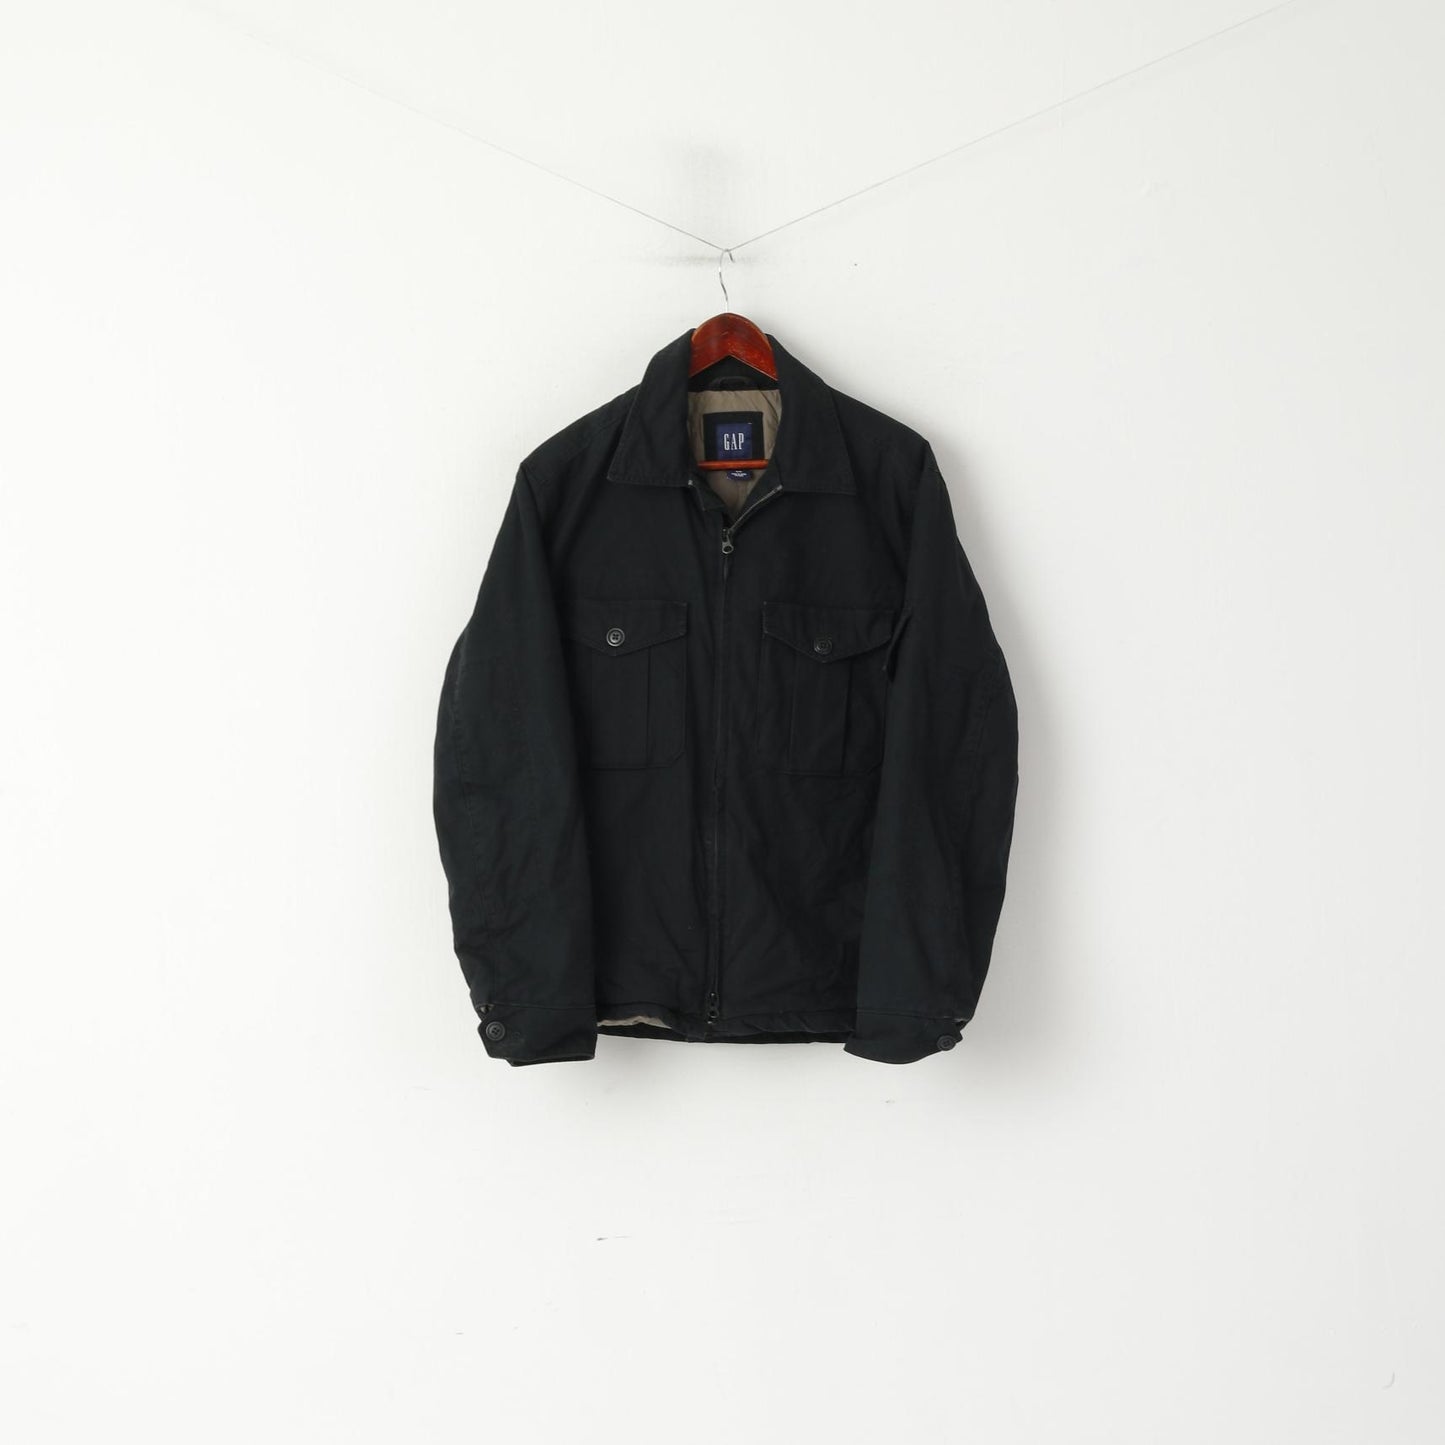 GAP Men M Jacket Black Padded Cotton Full Zipper Pocket Heritage Casual Top